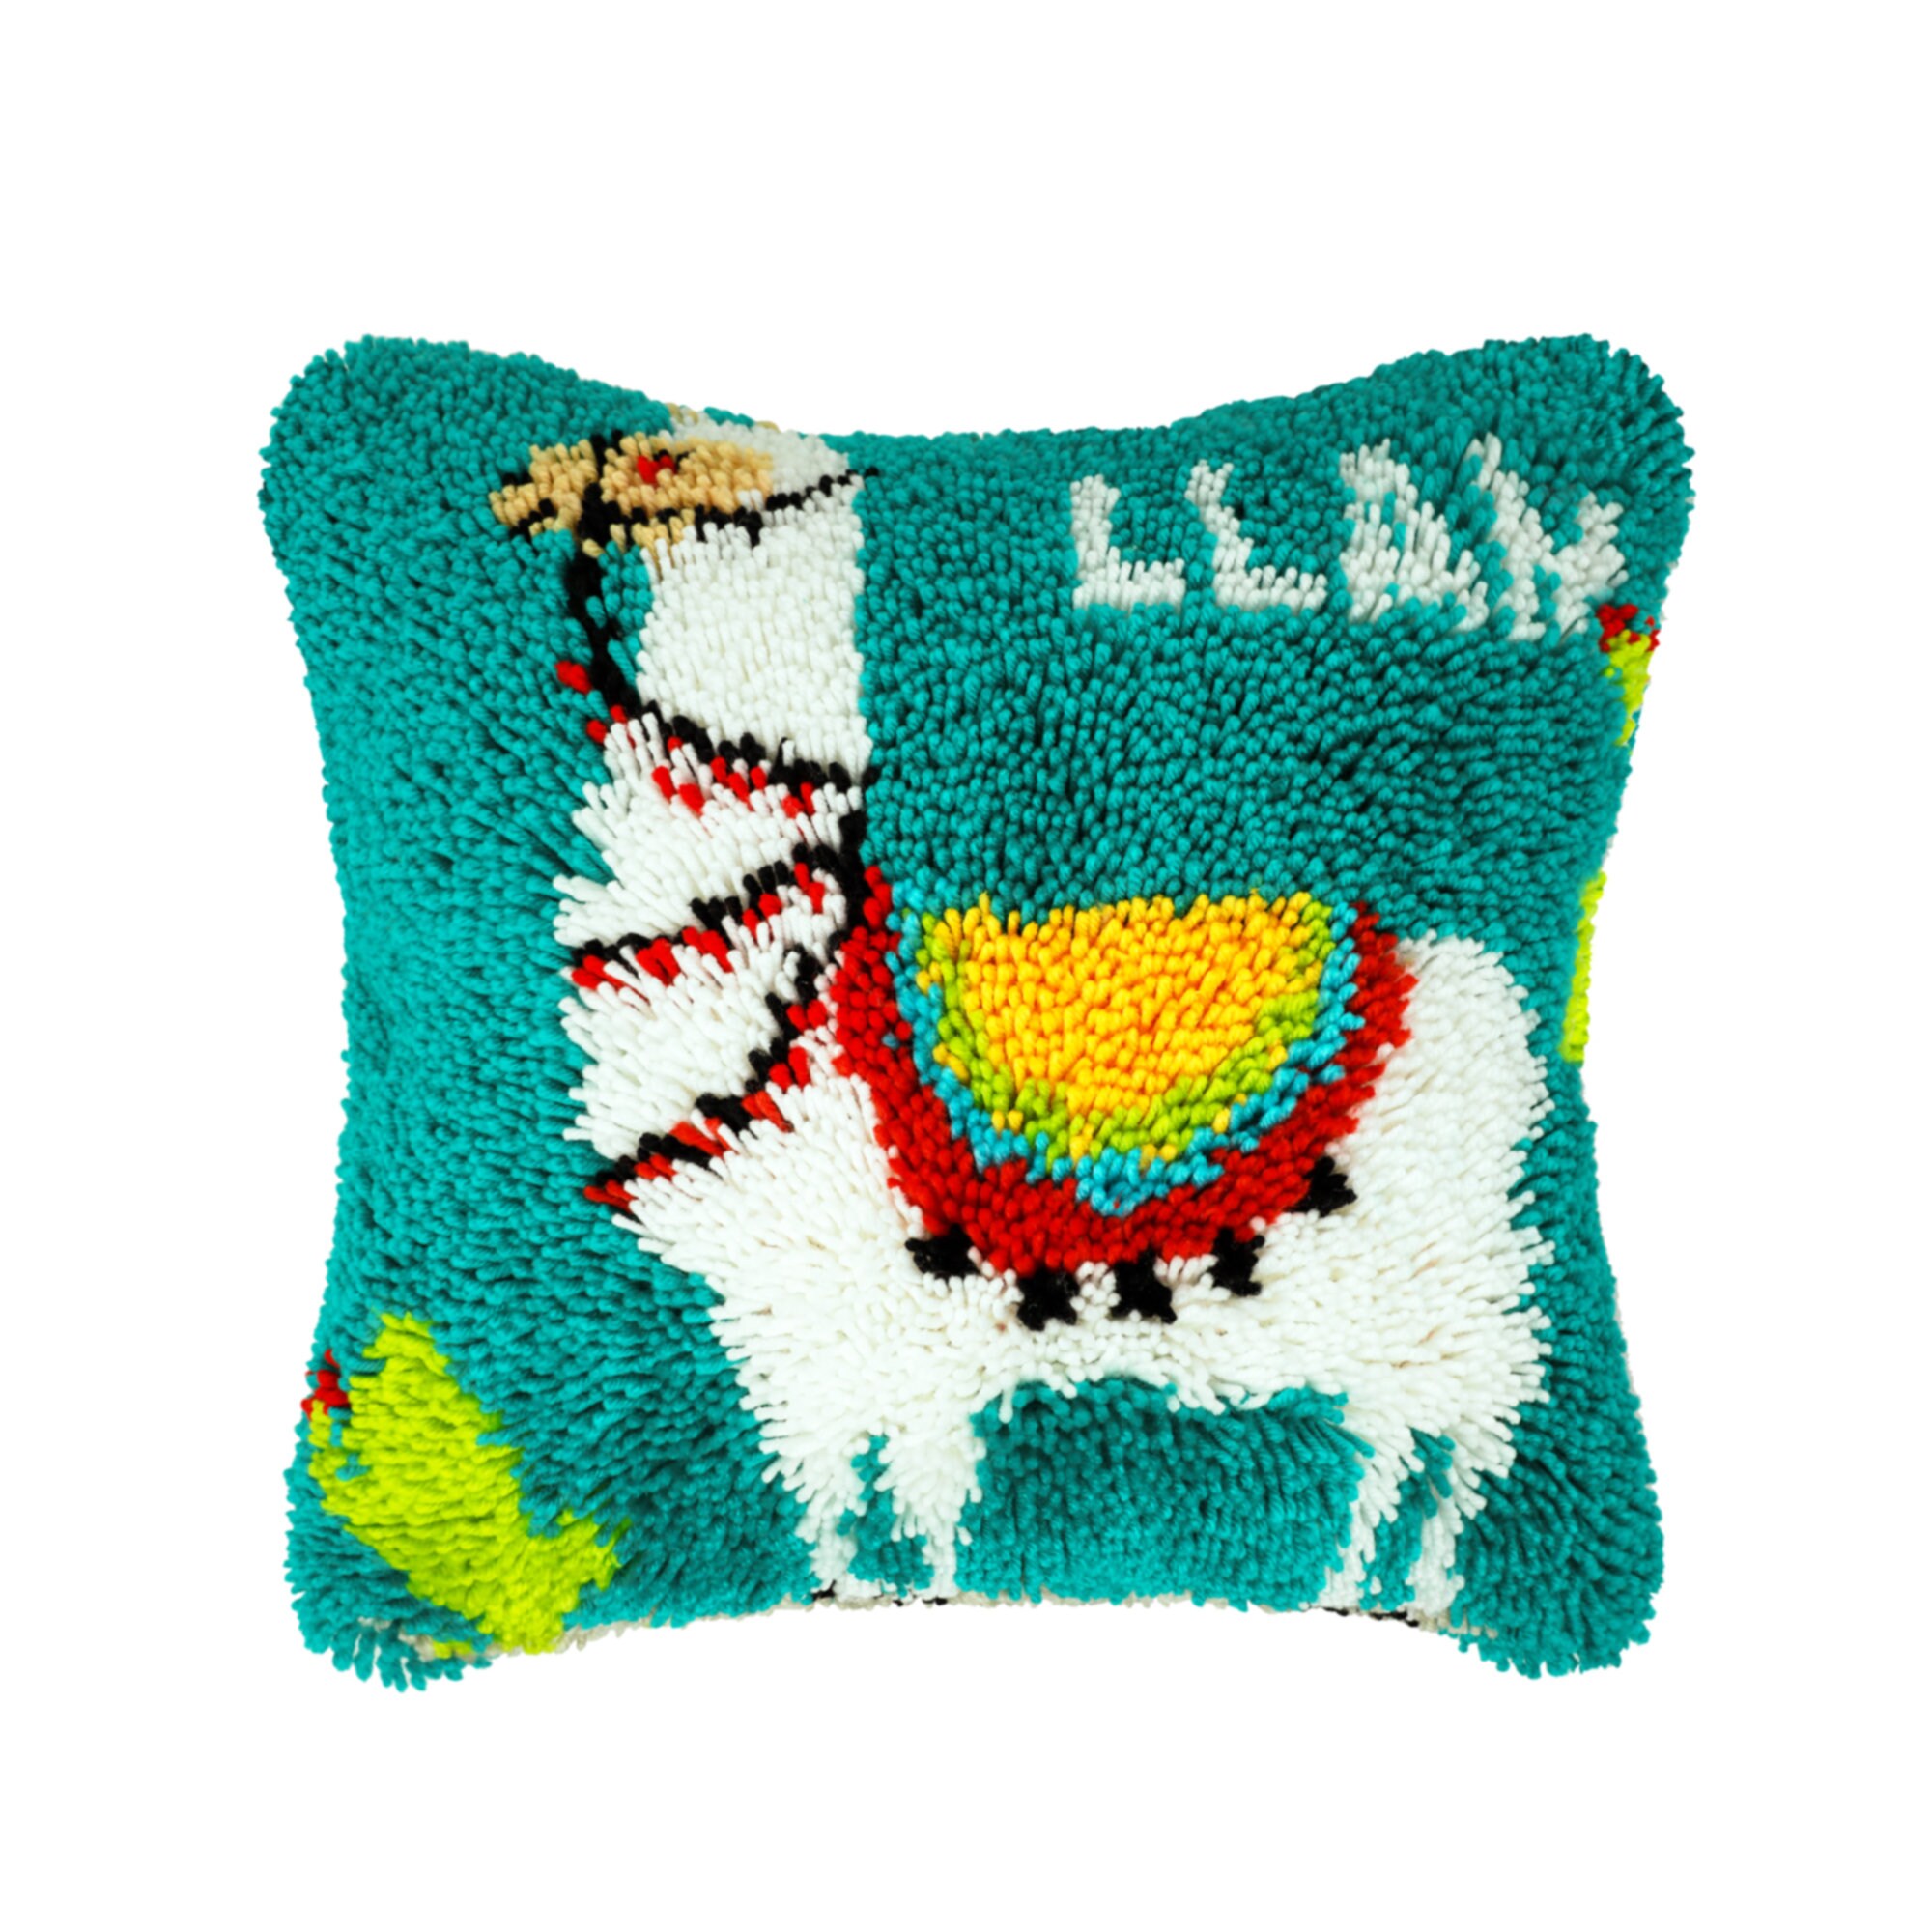 Sloth Latch Hook Kits DIY Throw Pillow Cover Crochet Crafts